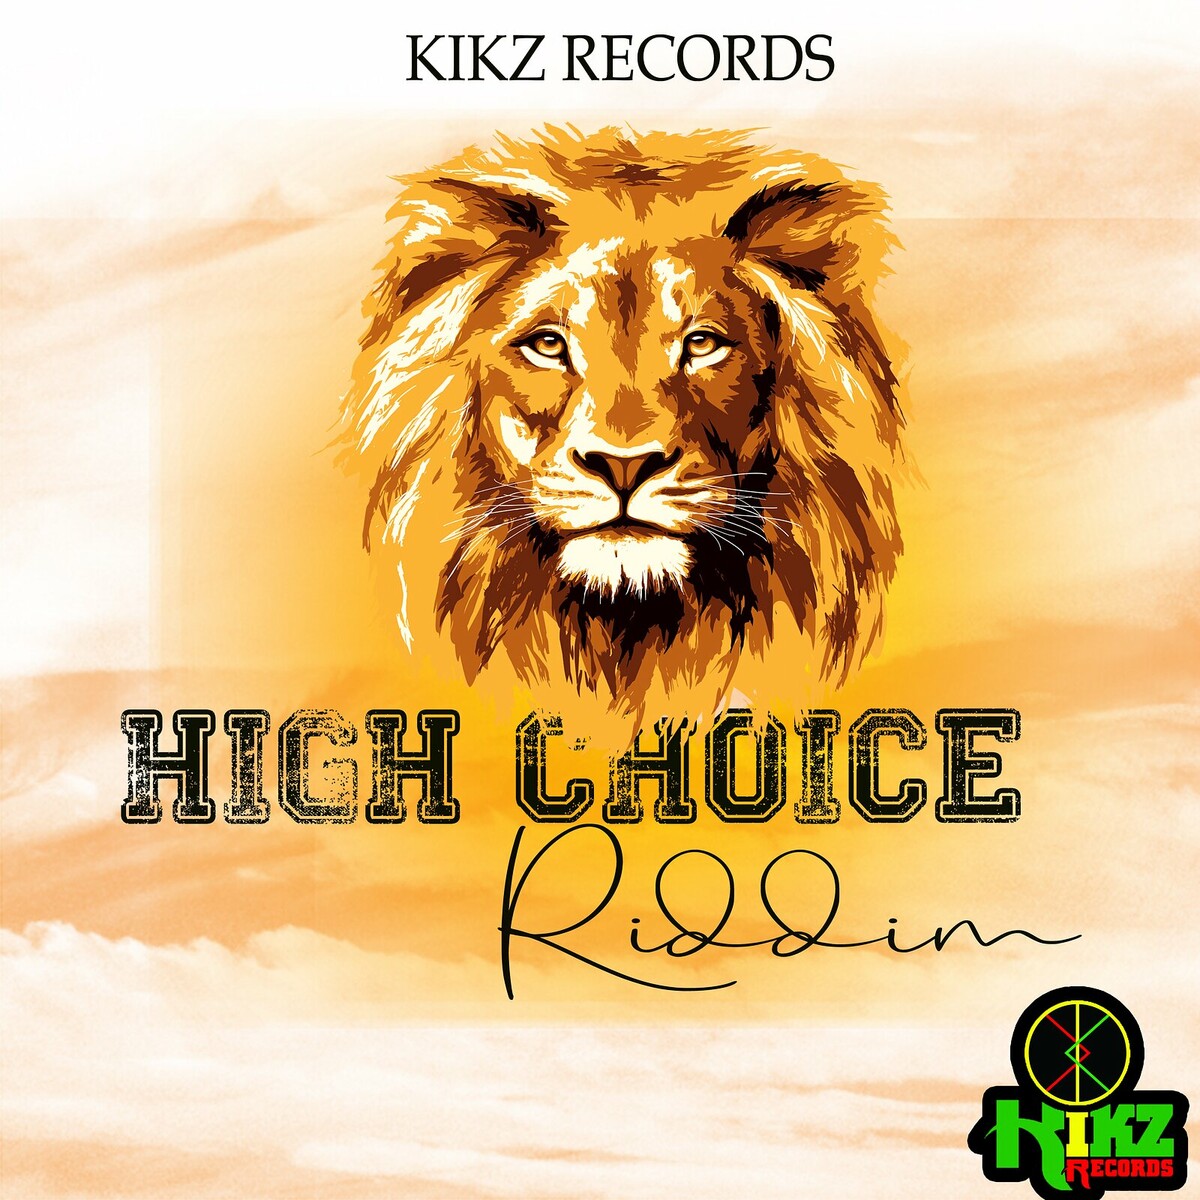 HIGH CHOICE RIDDIM - KIKZ RECORDS - Regime Radio